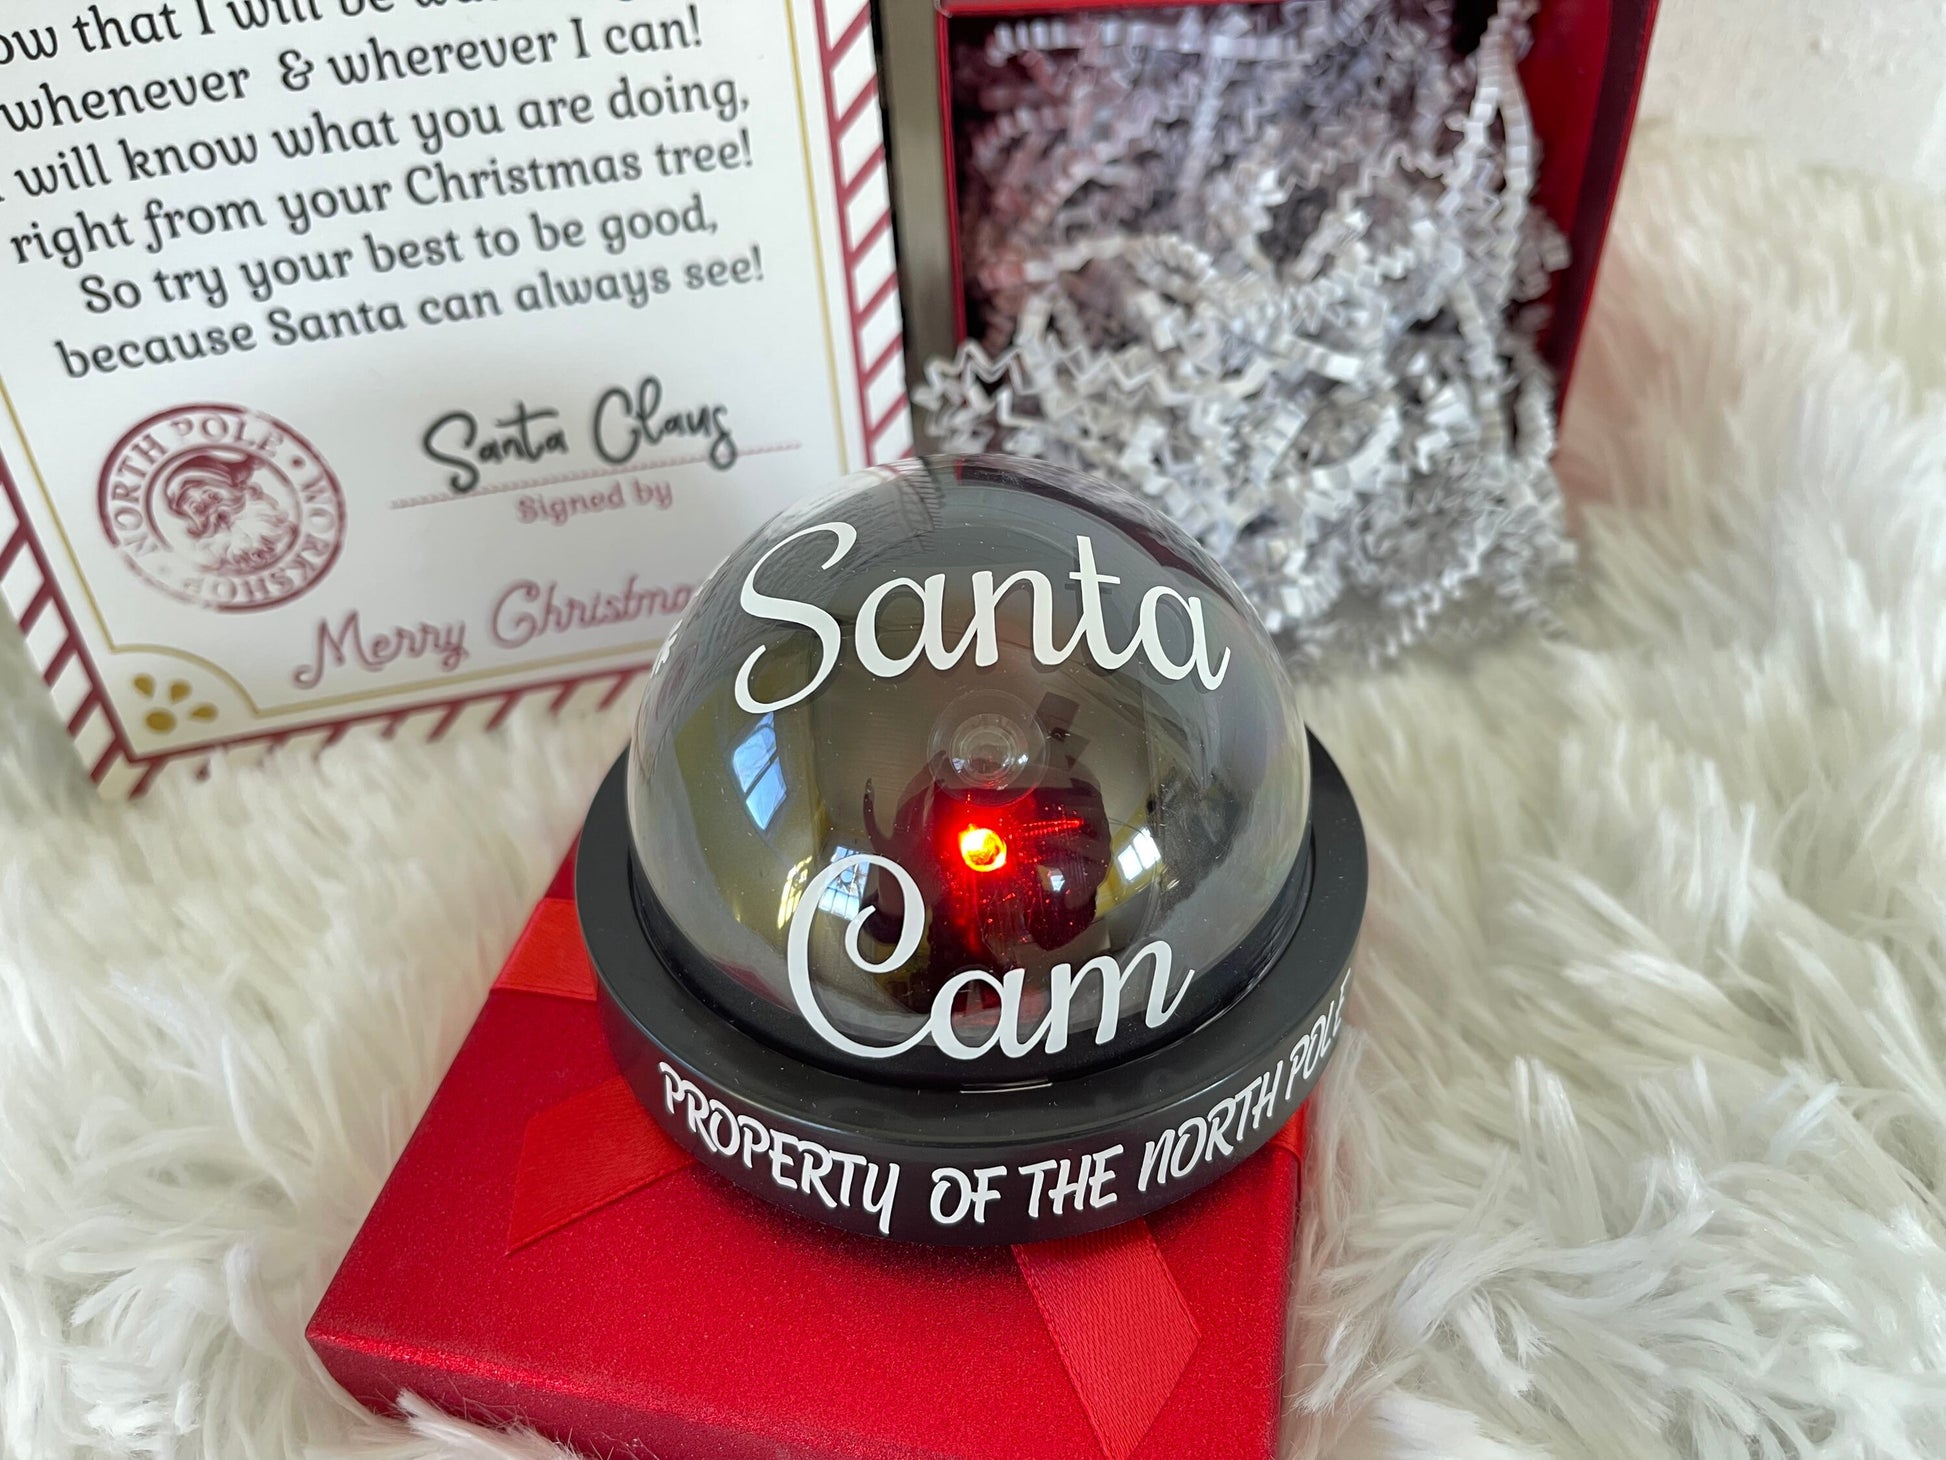 Santa Cam Christmas Blinking Mock Surveillance Camera and Santa Letter, North Pole Elves, Holiday Gift Wrapped, No Peeking, Xmas Decor, Xmas